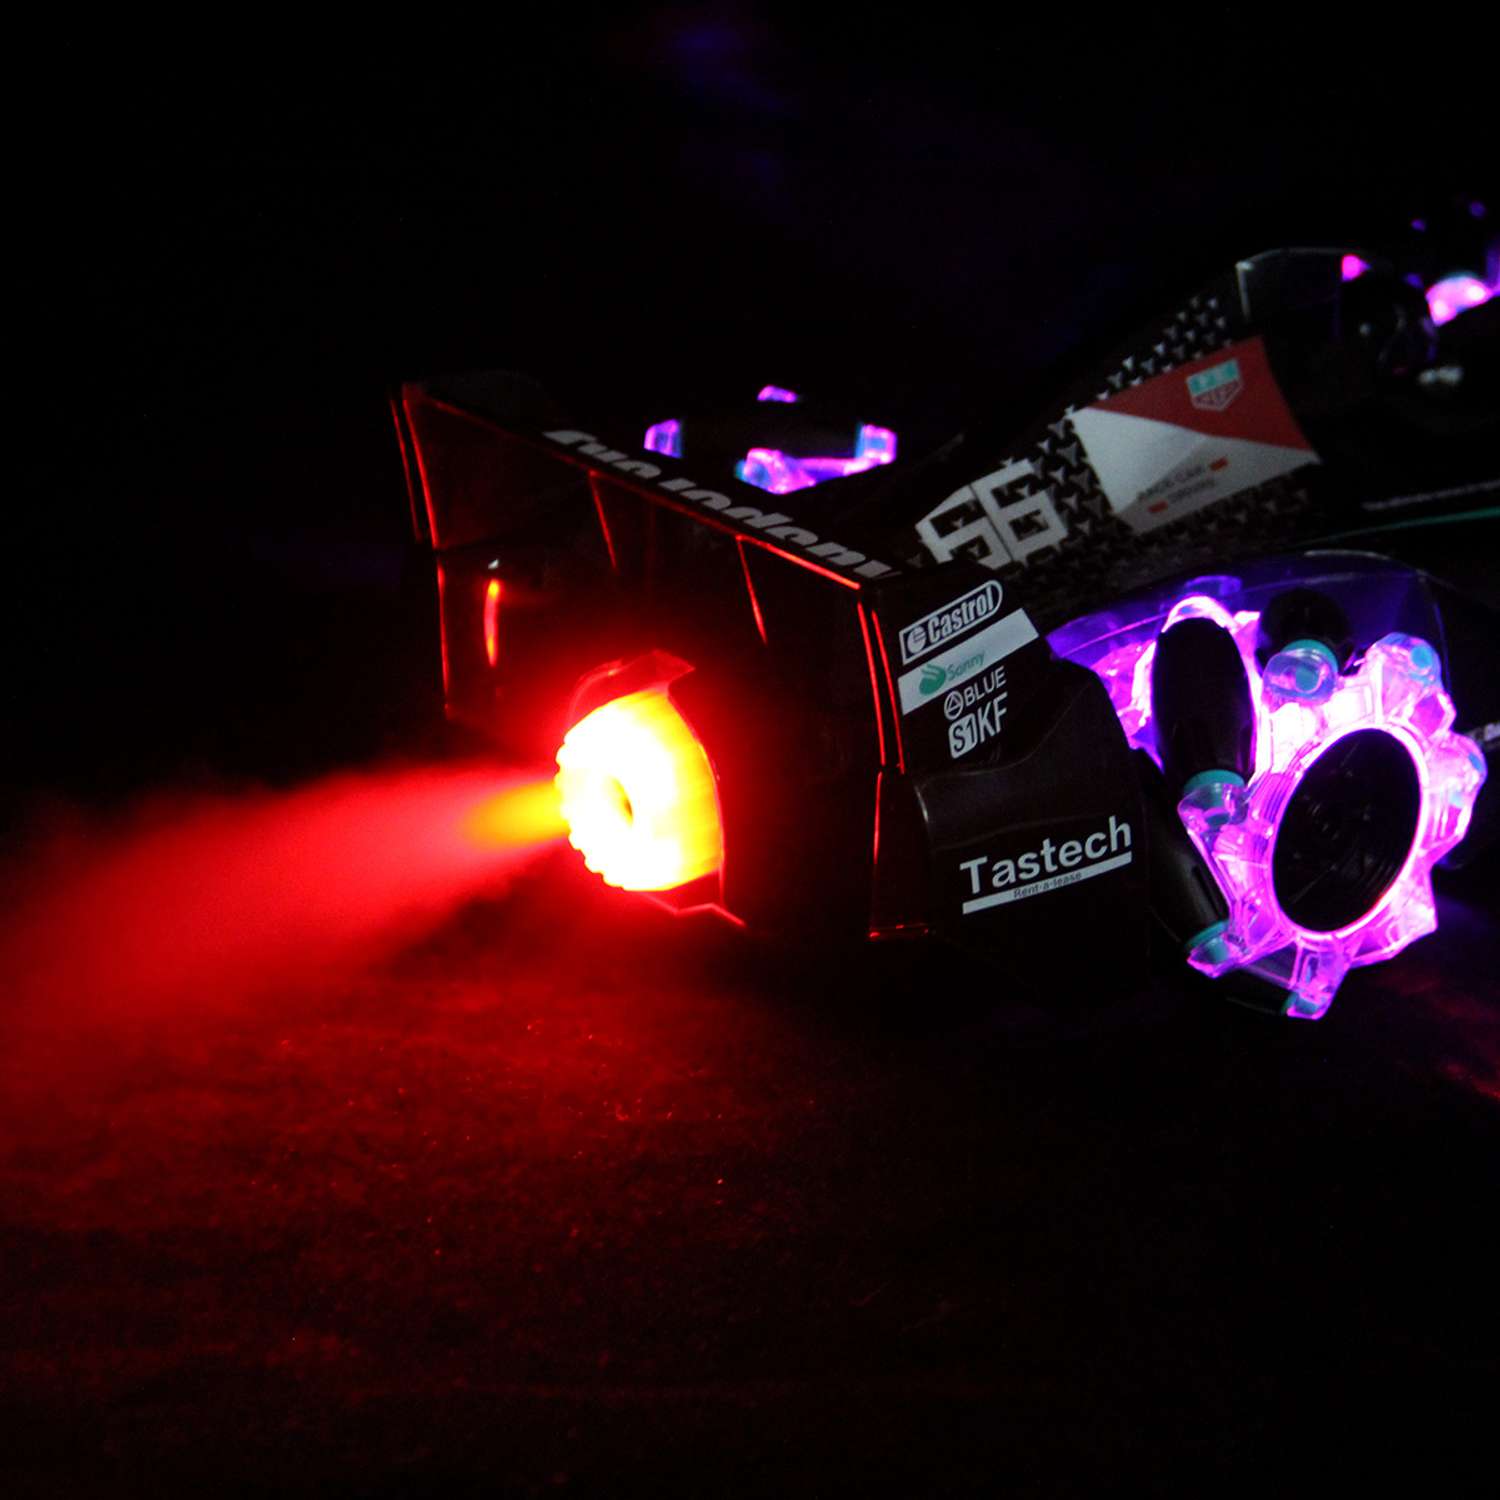 Машина на пульте управления Veld Co с функцией пара музыкой и подсветкой - фото 4